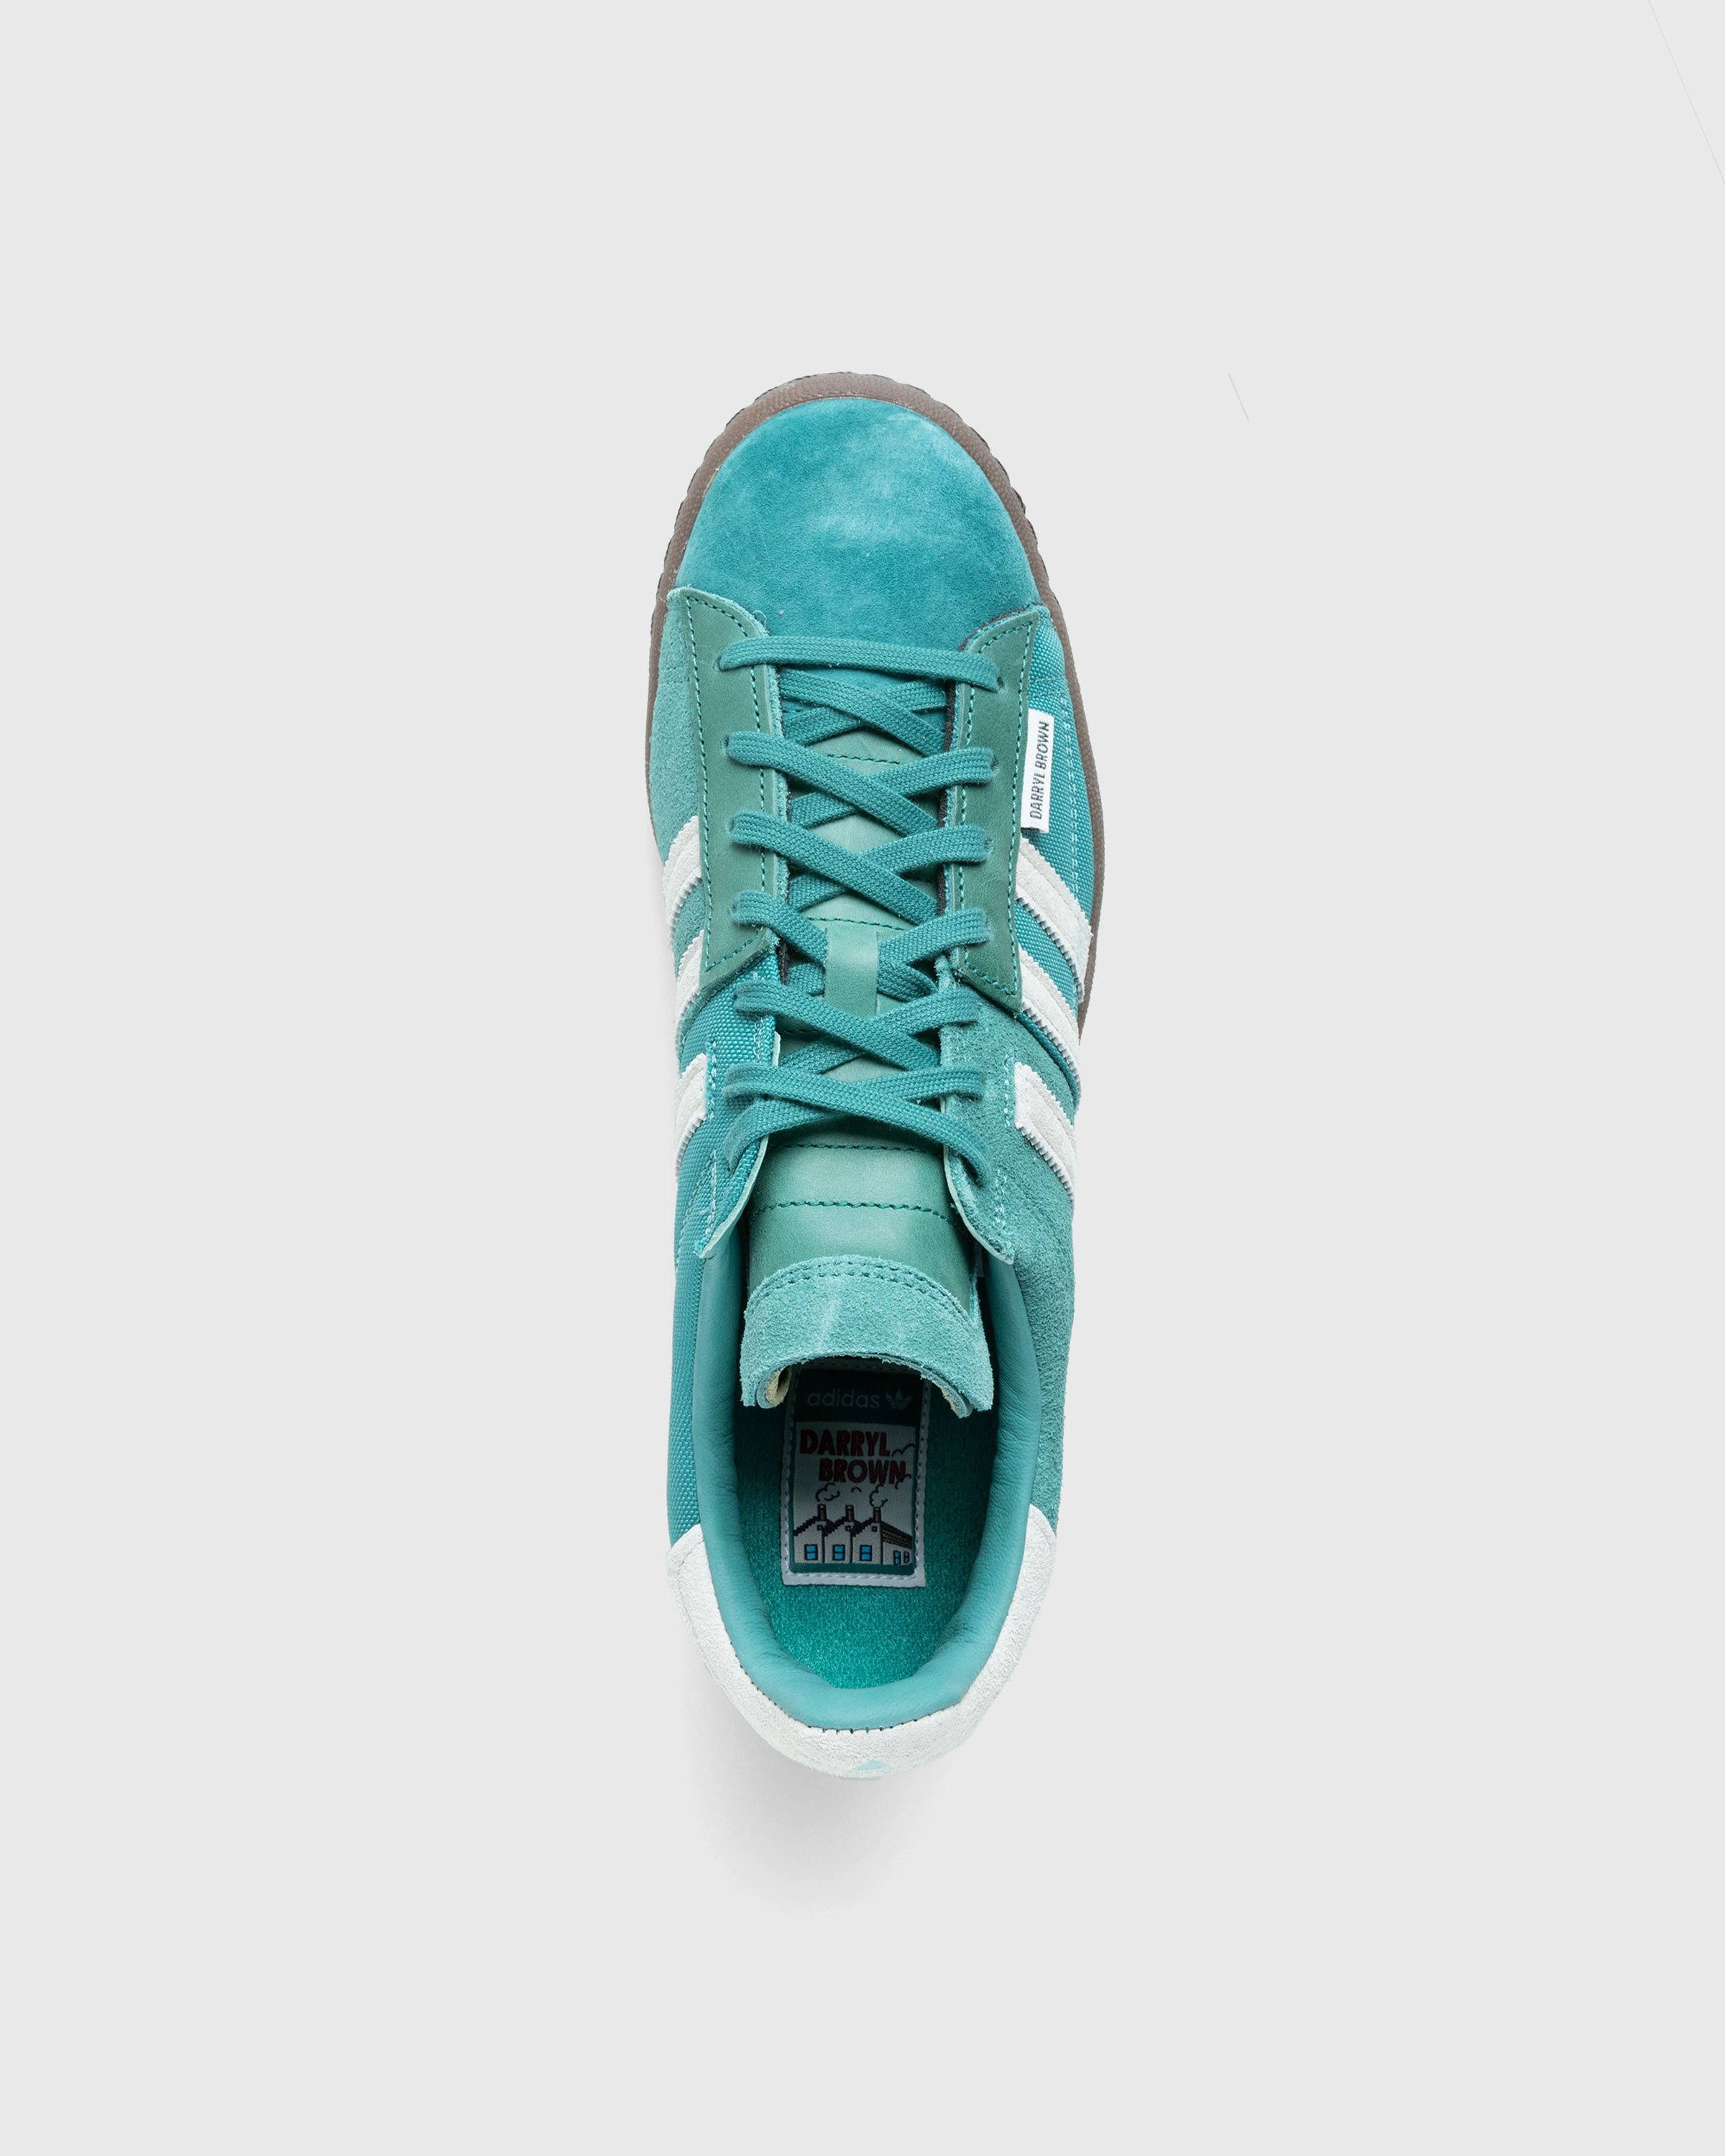 Adidas x Darryl Brown - Campus 80 - Footwear - Green - Image 5